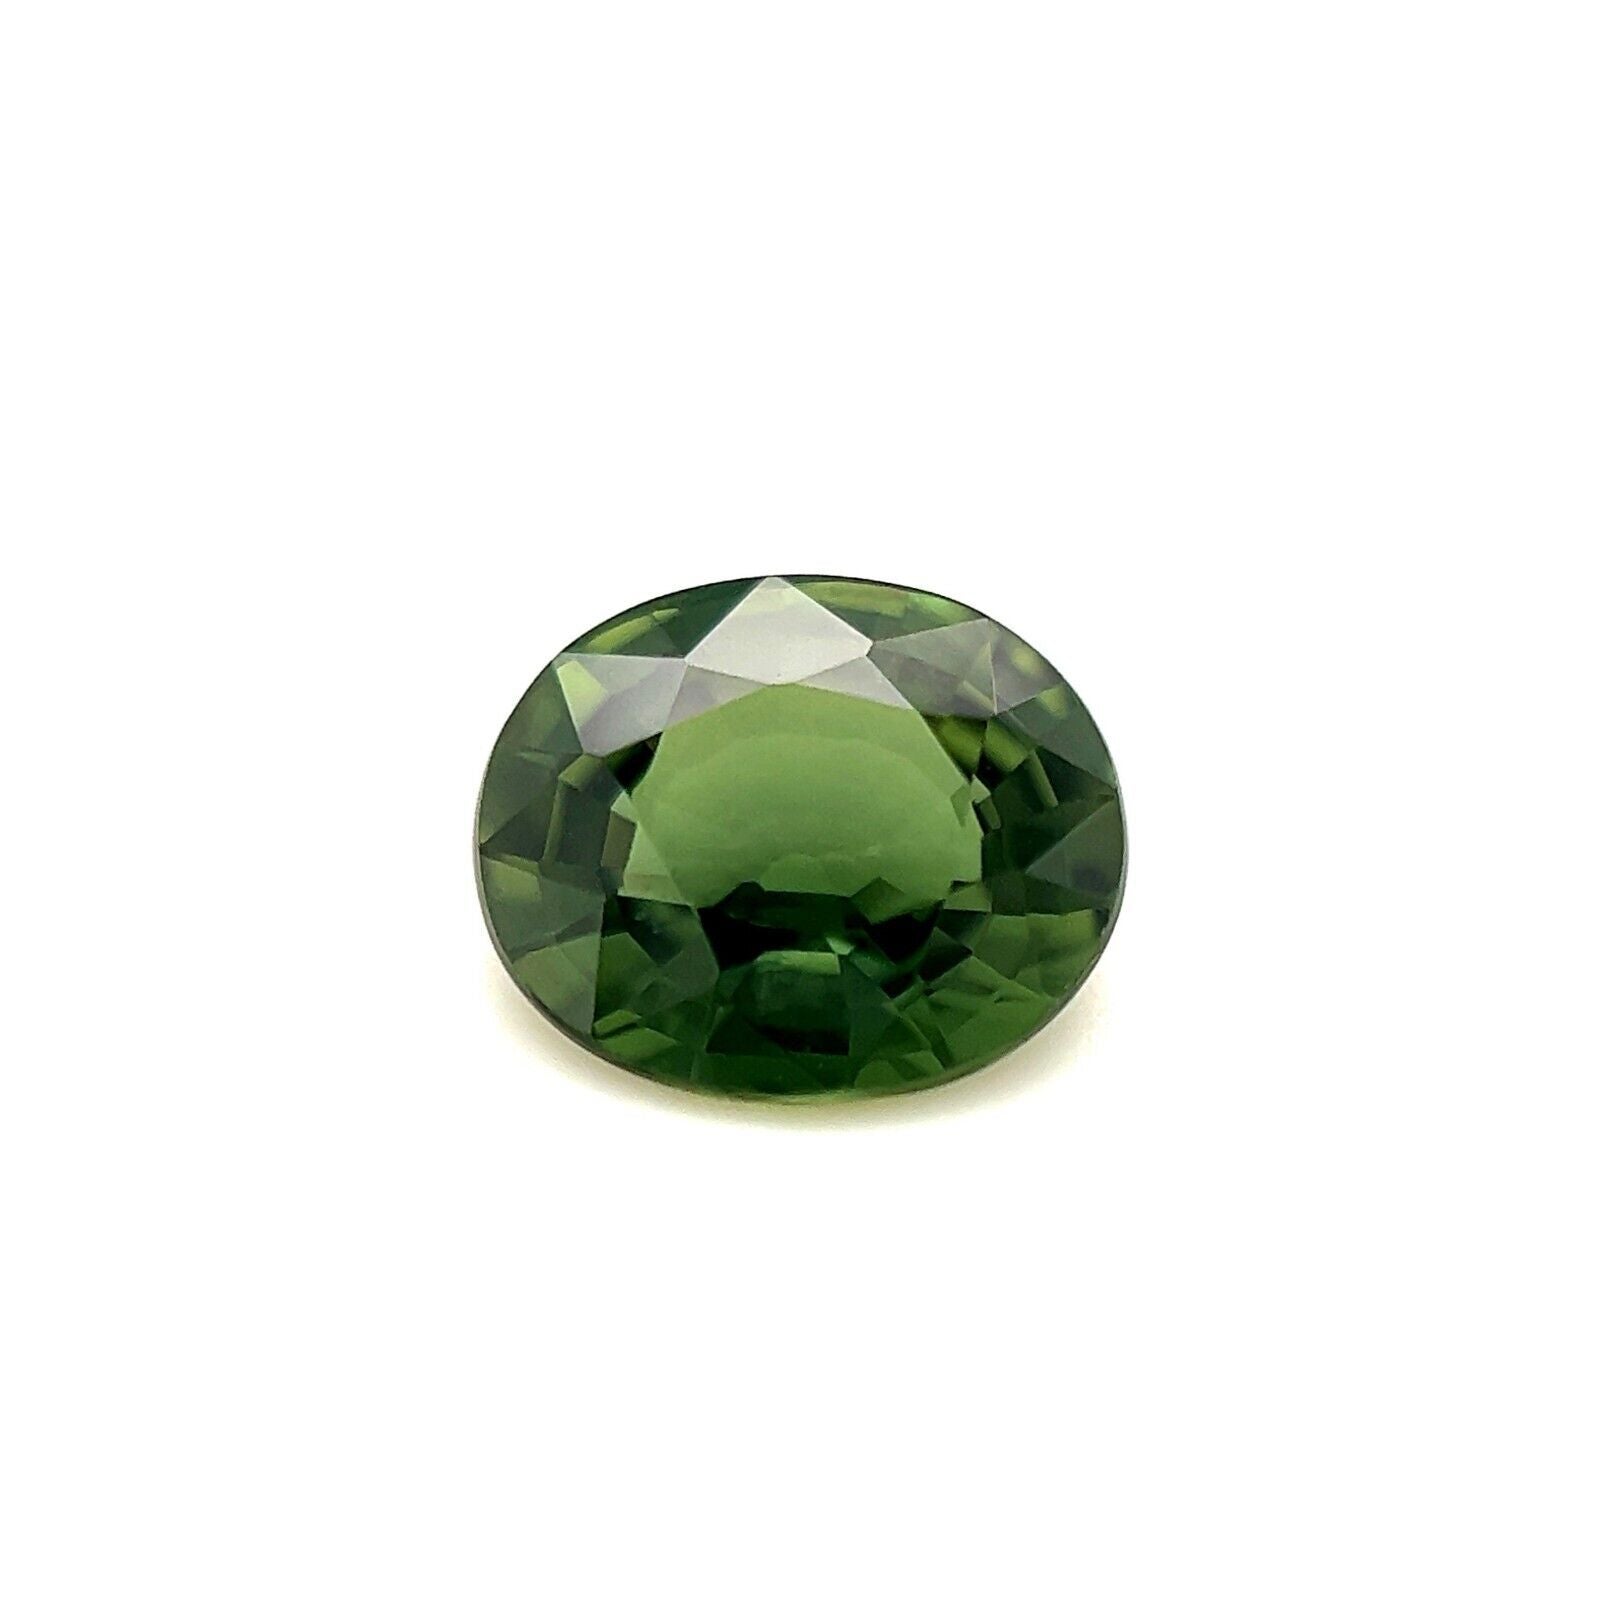 Saphir vert australien de 1,38 carat, taille ovale, pierre précieuse non sertie, rare